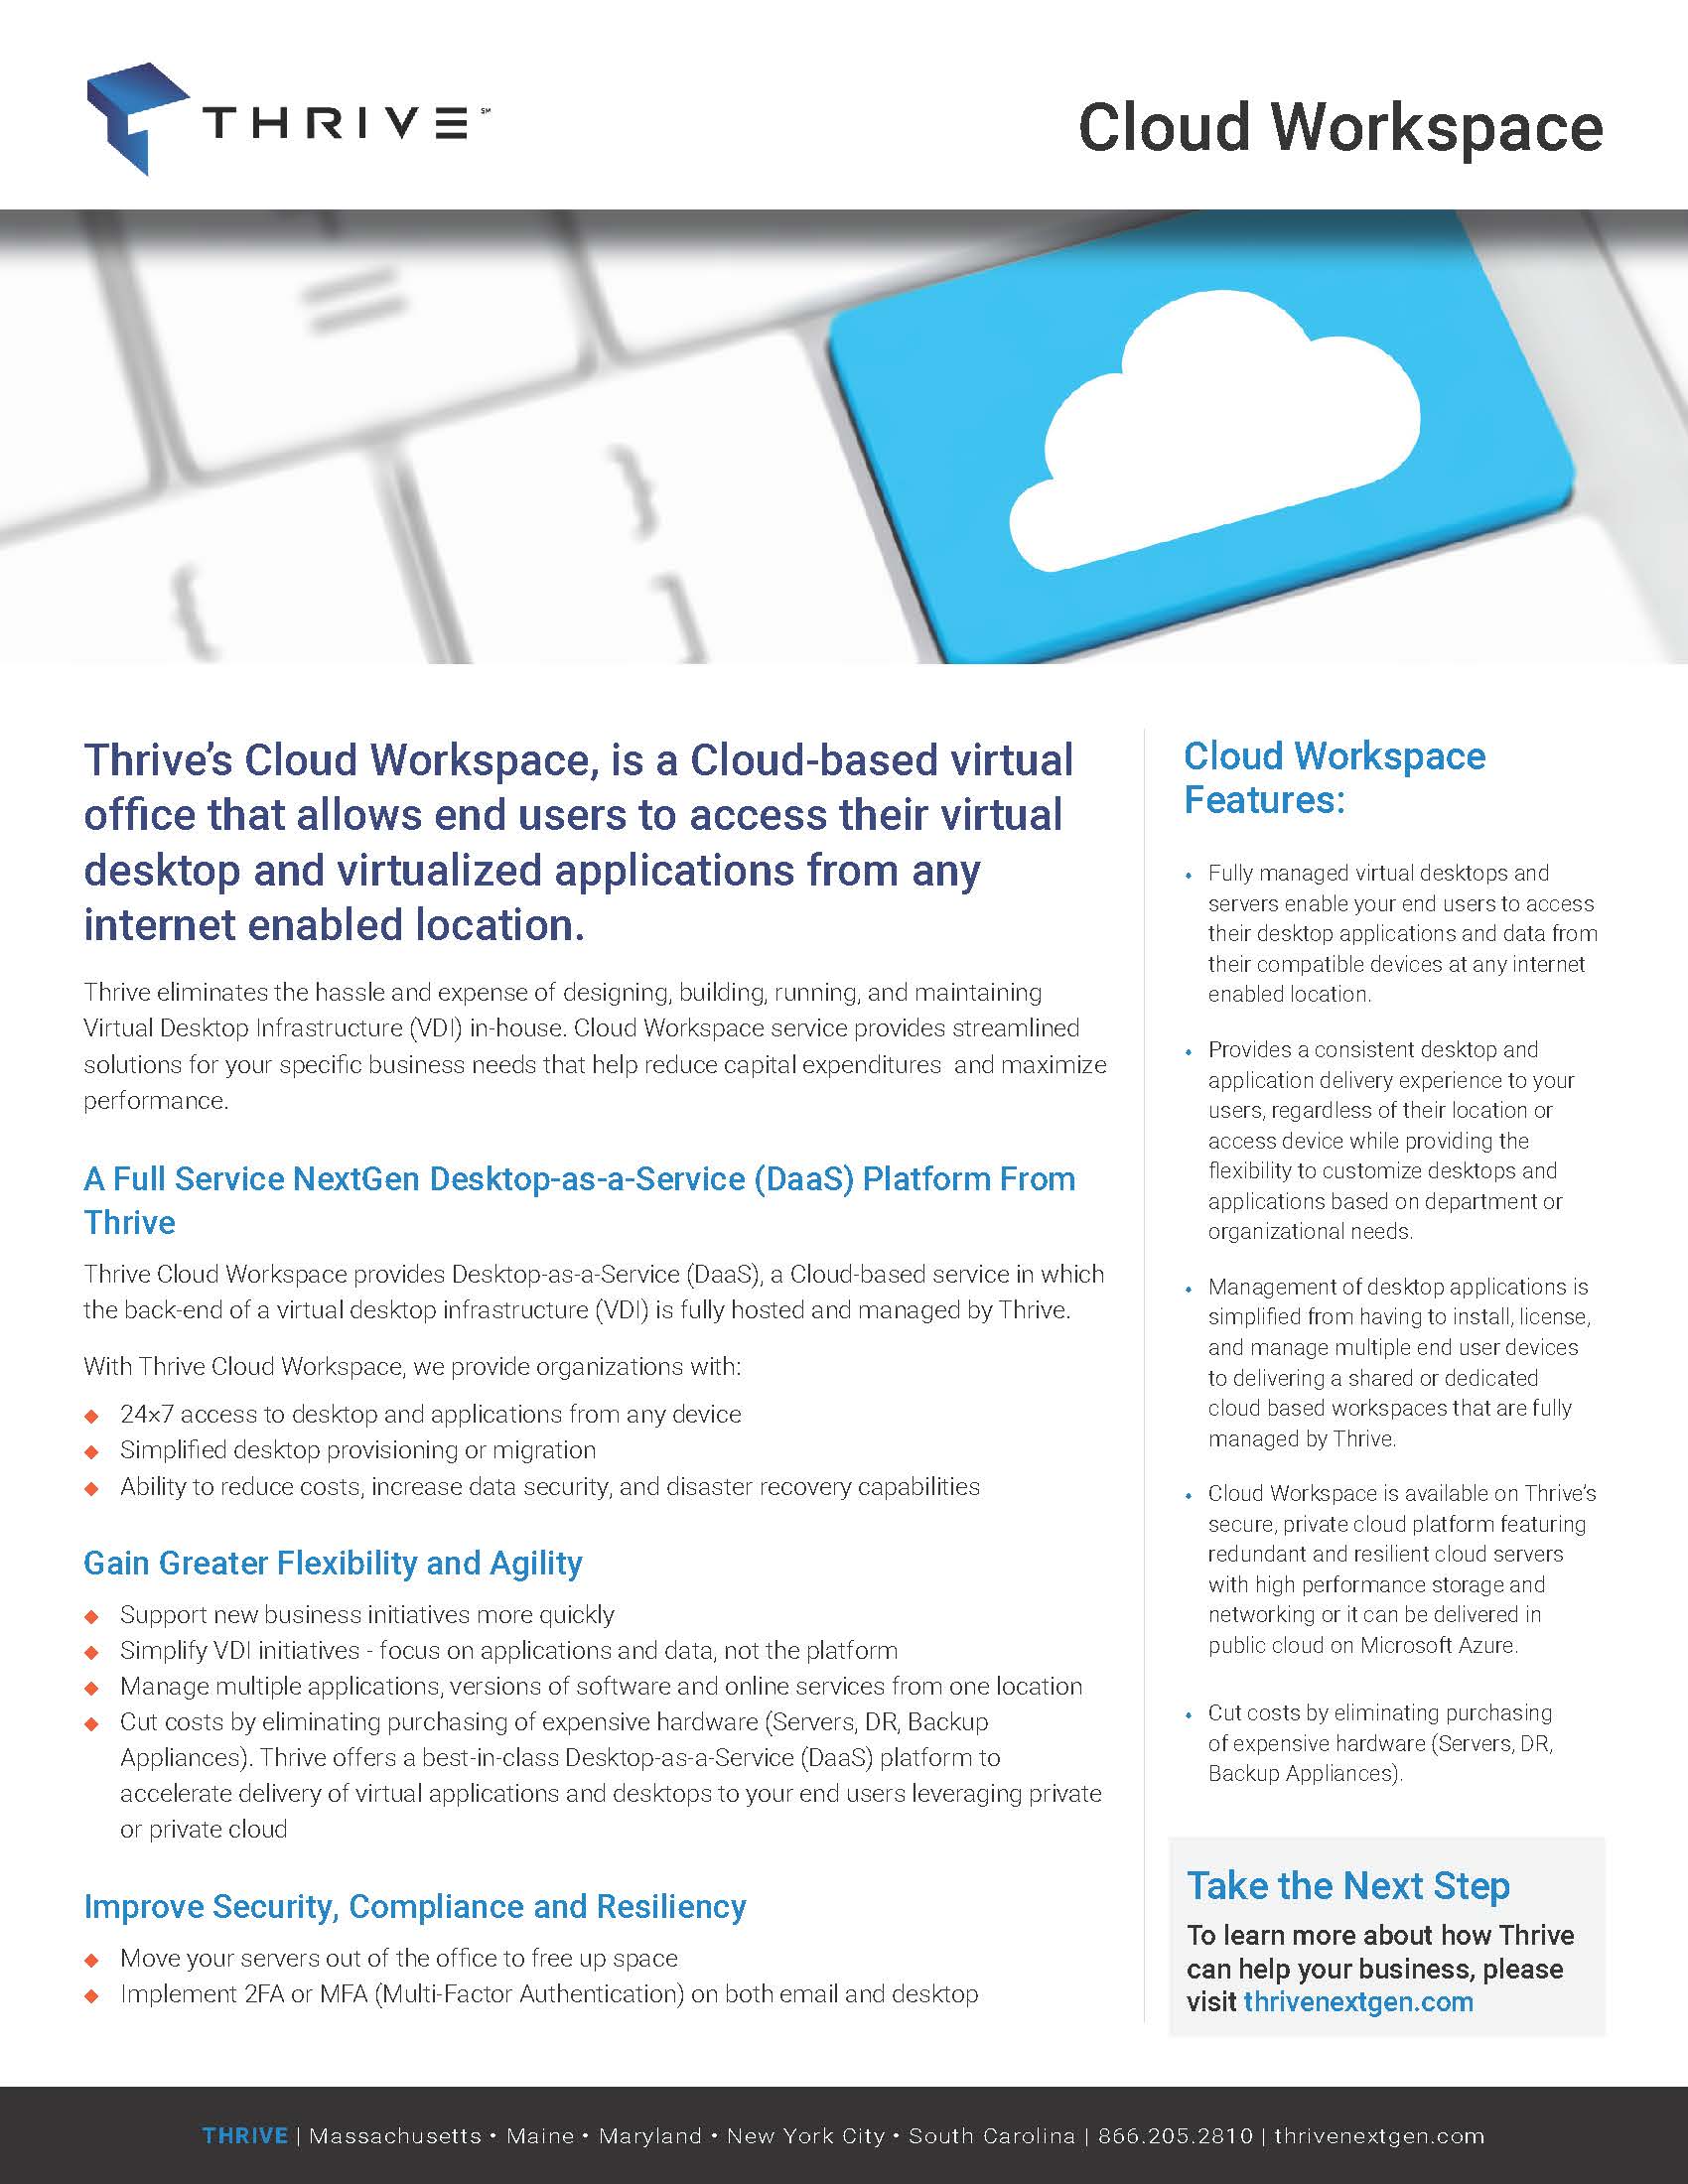 Thrive Cloud Workspace